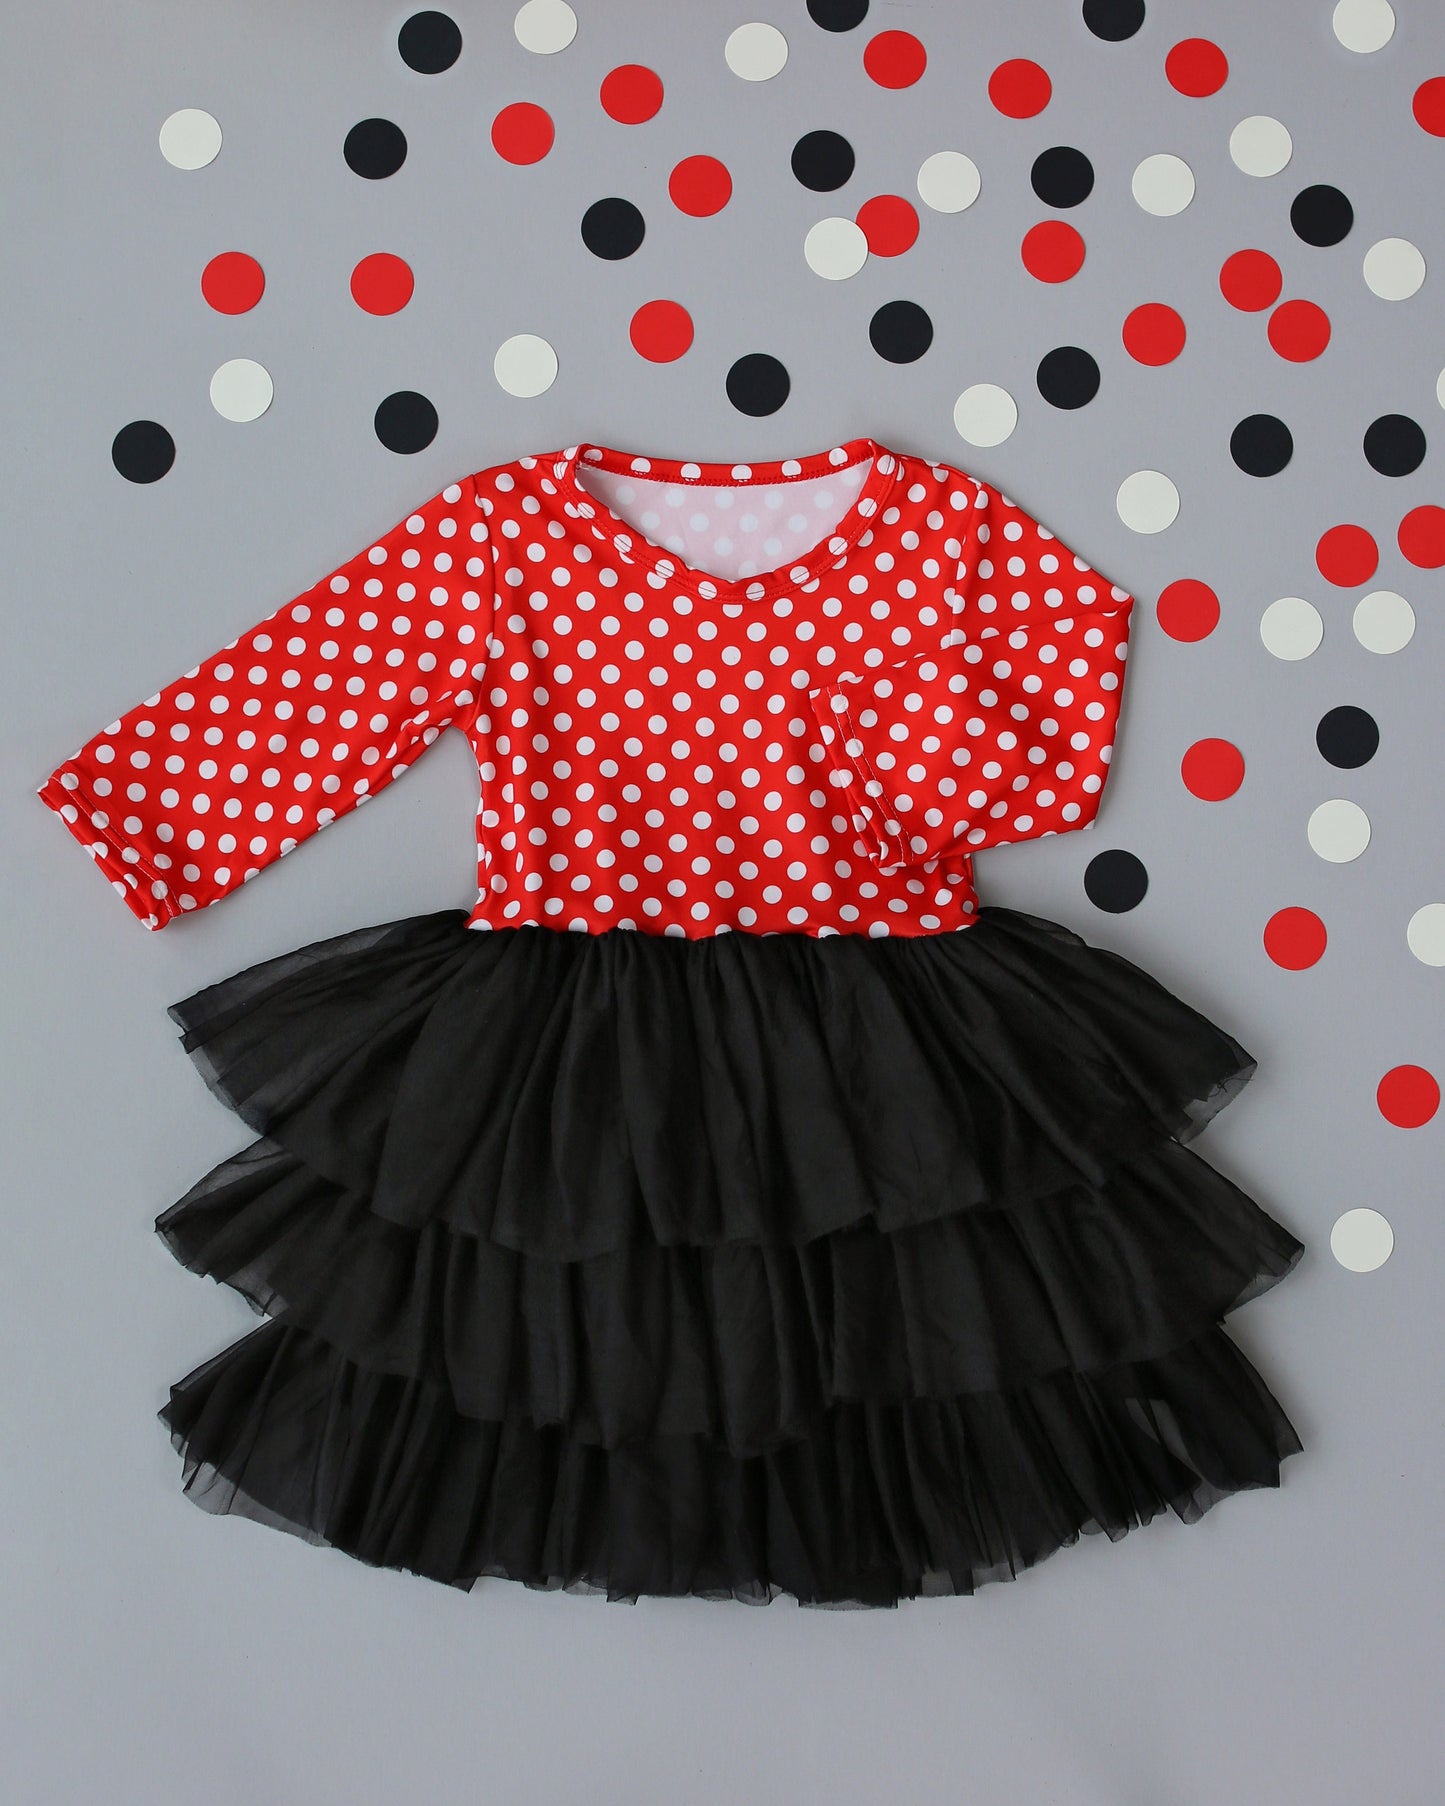 3/4 Sleeve Tutu Dress in Black and Red Polka Dots